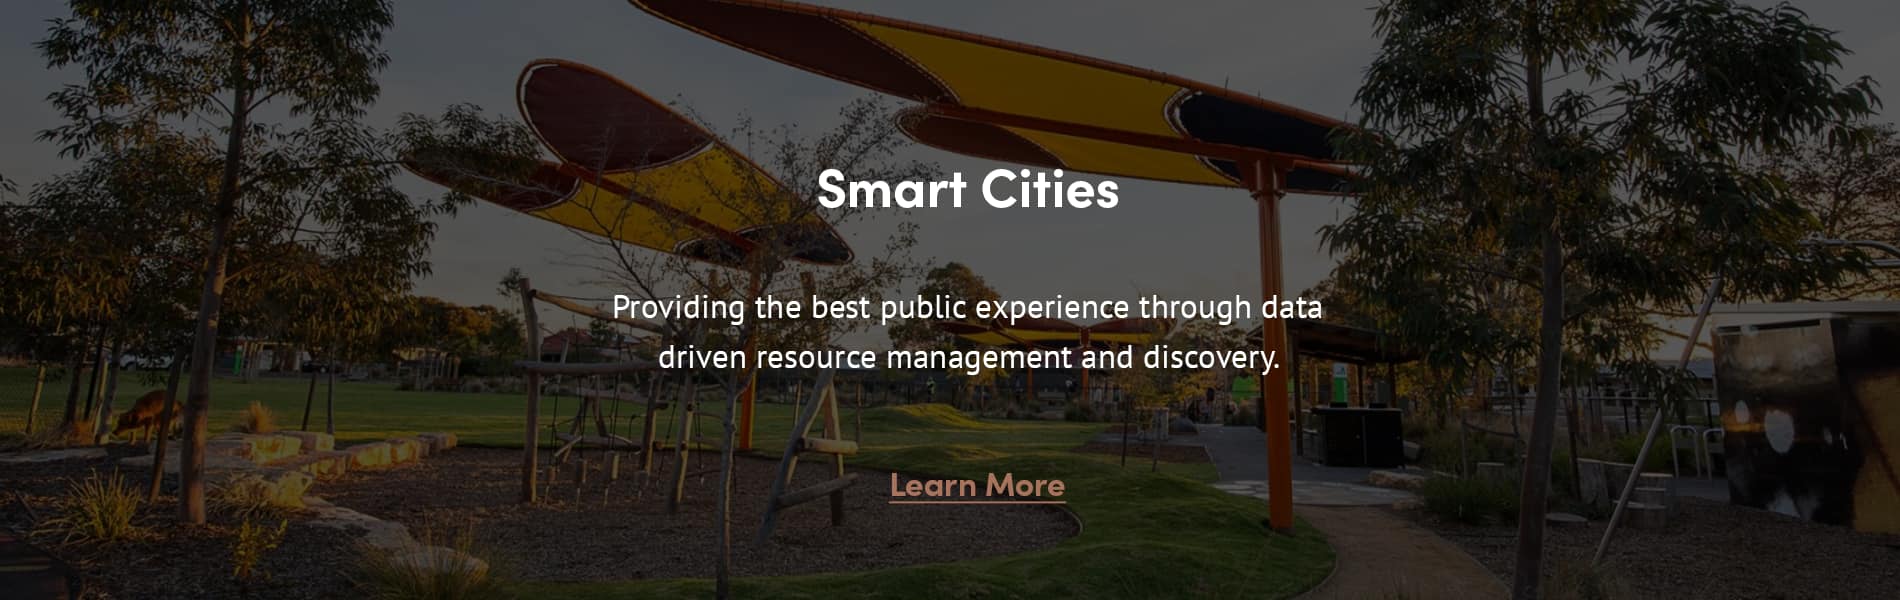 Hero-image-Smart-Cities